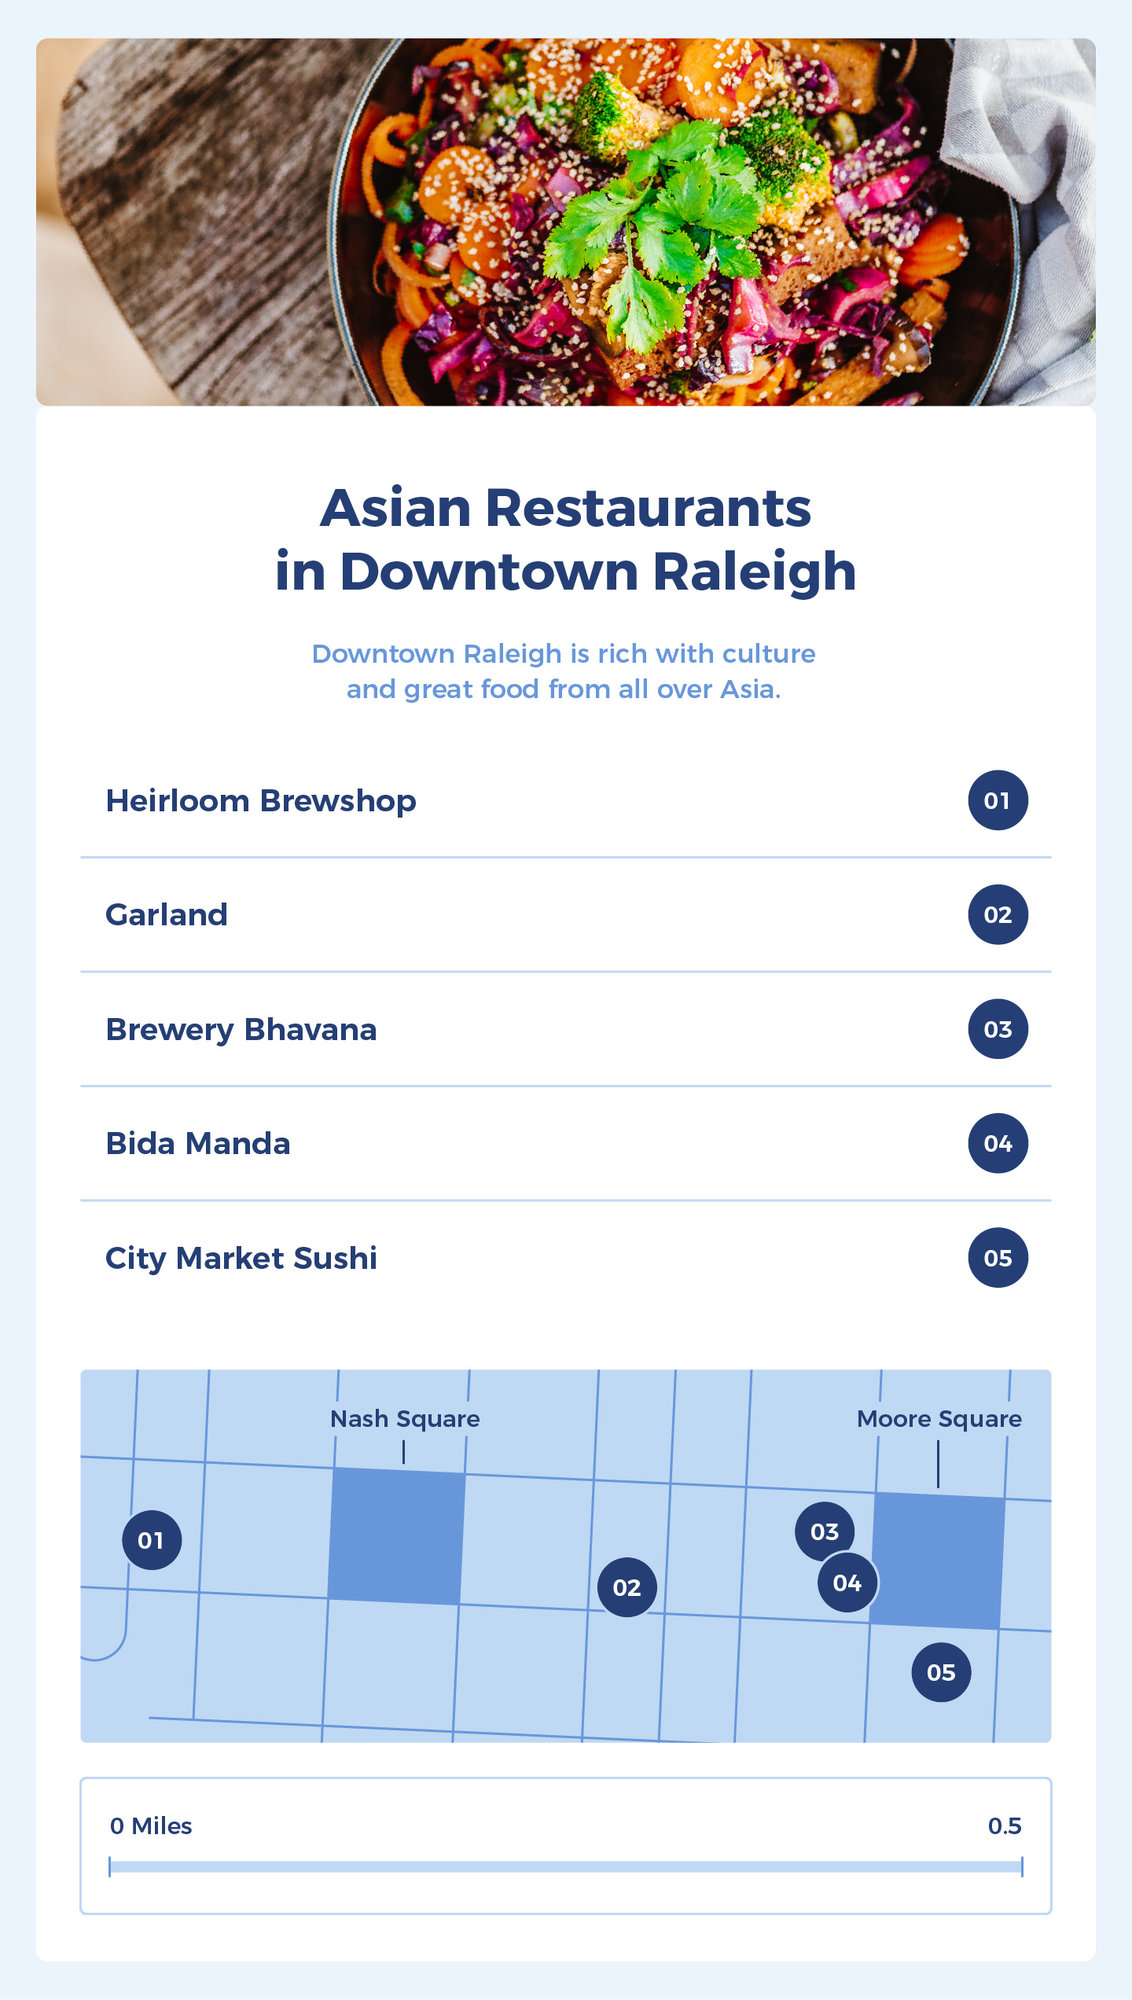 Asian restaurants in Downtown Raleigh are Heirloom Brewshop, Garland, Brewery Bhavana, Bida Manda, and City Market Sushi.